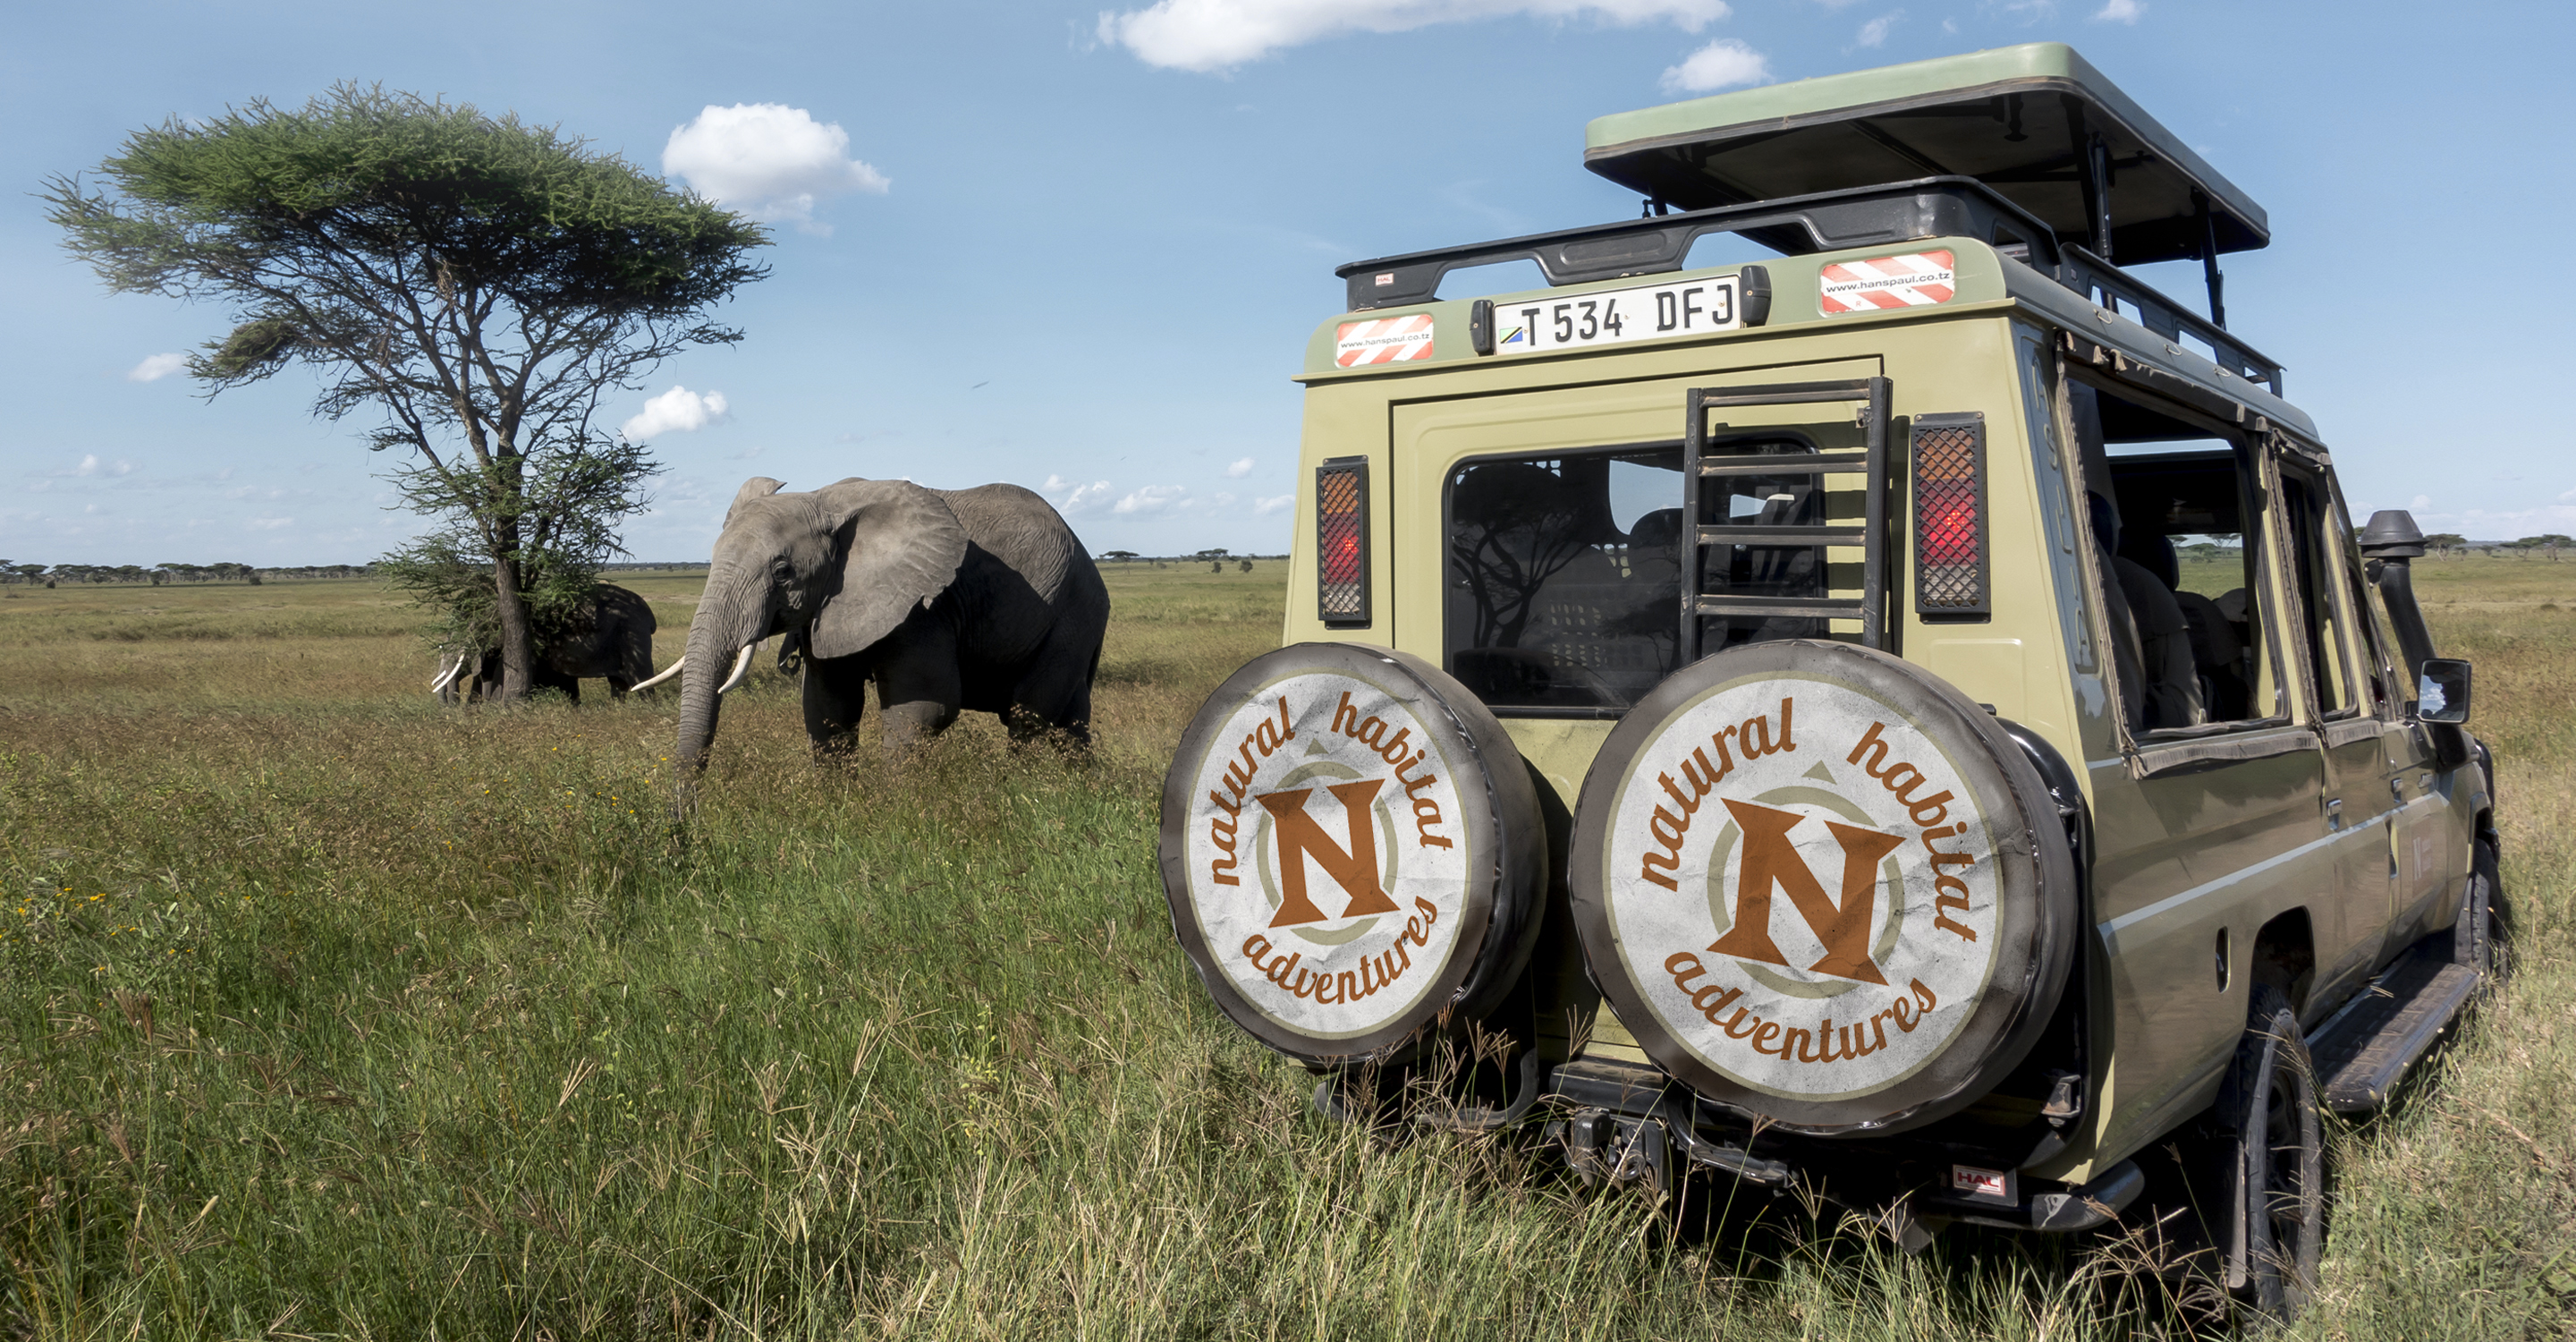 A Natural Habitat Adventures safari truck parks near elephants in the Maasai Mara National Reserve, Kenya